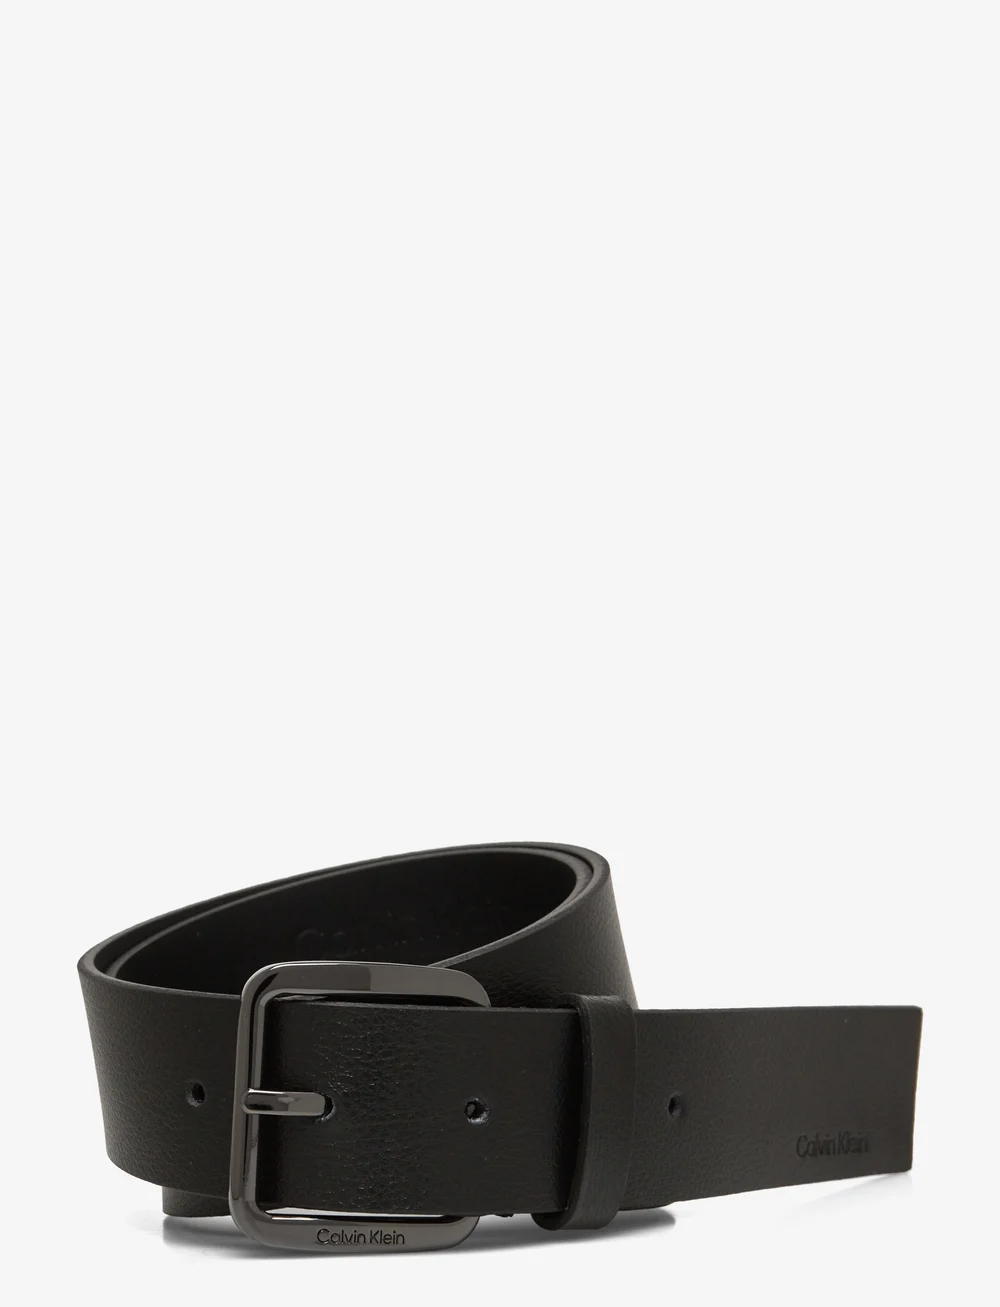 Calvin Klein Ck Concise Pb 35mm - Belts